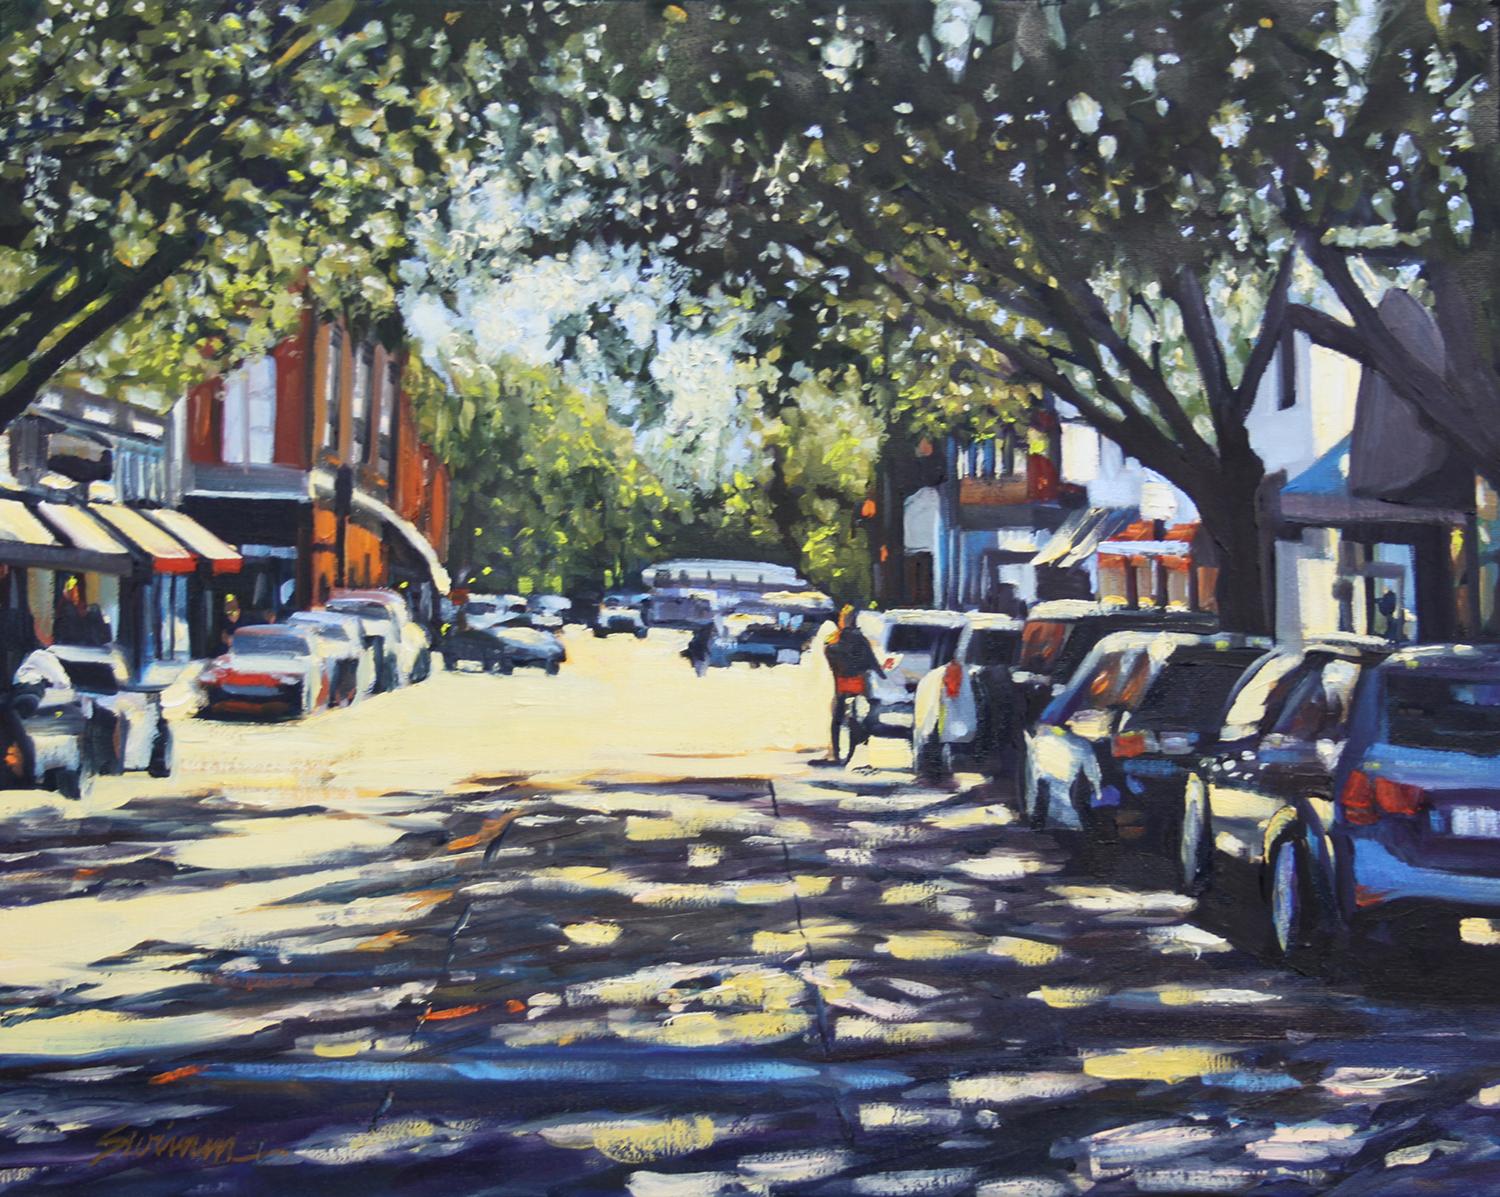 Tom Swimm Landscape Painting - "Savannah Shadows" Colorful Street Scene